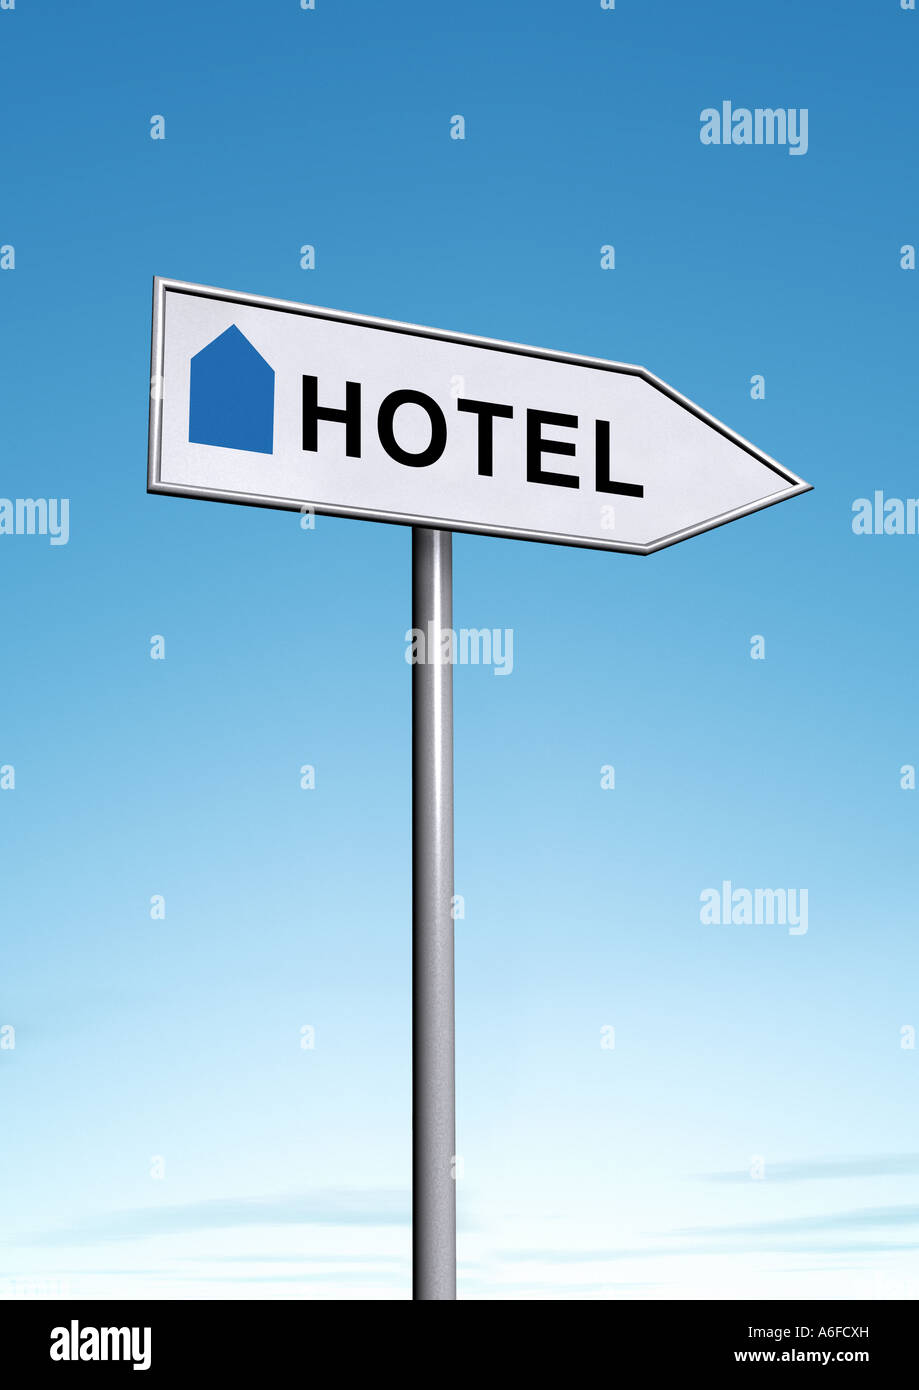 hotel Hotel Stock Photo